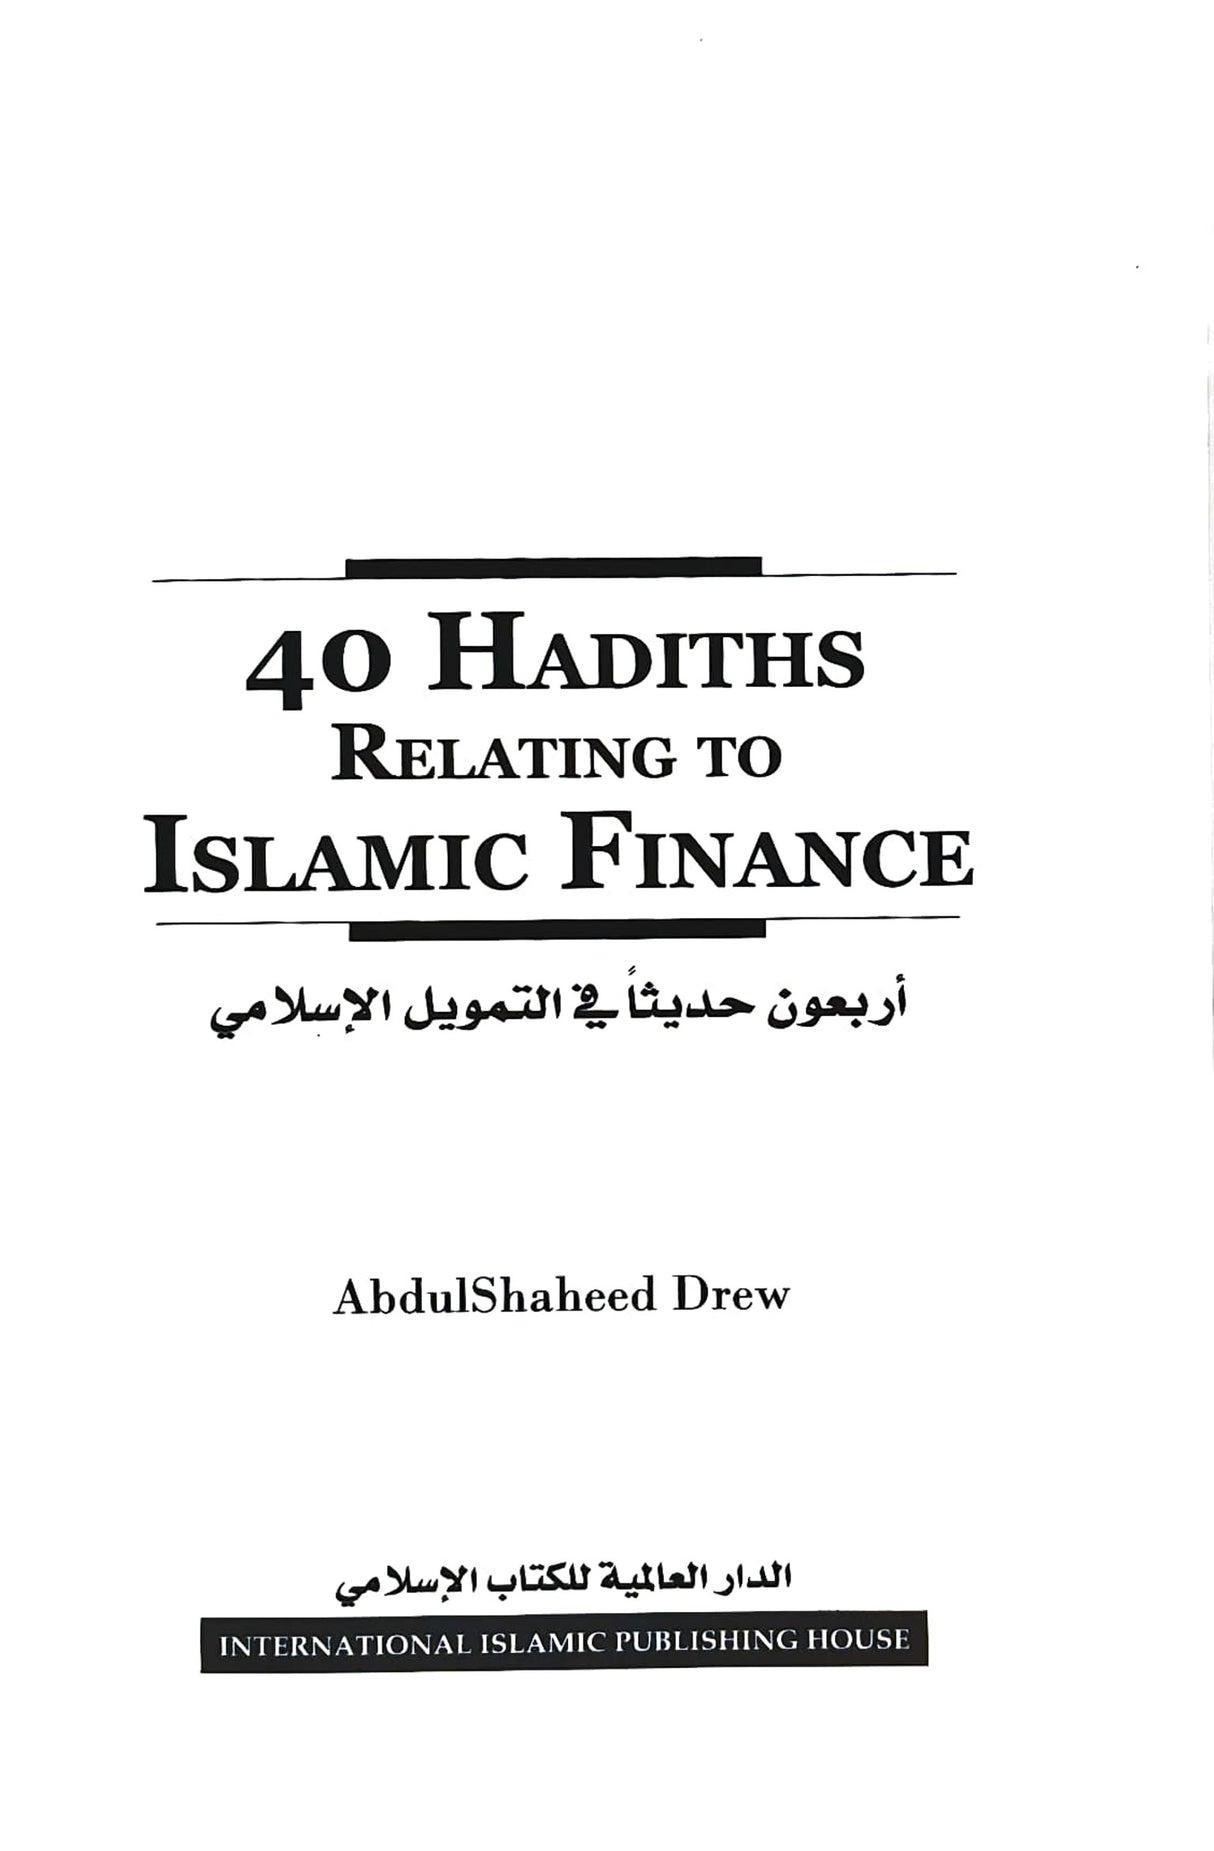 40 Hadiths Relating to Islamic Finance